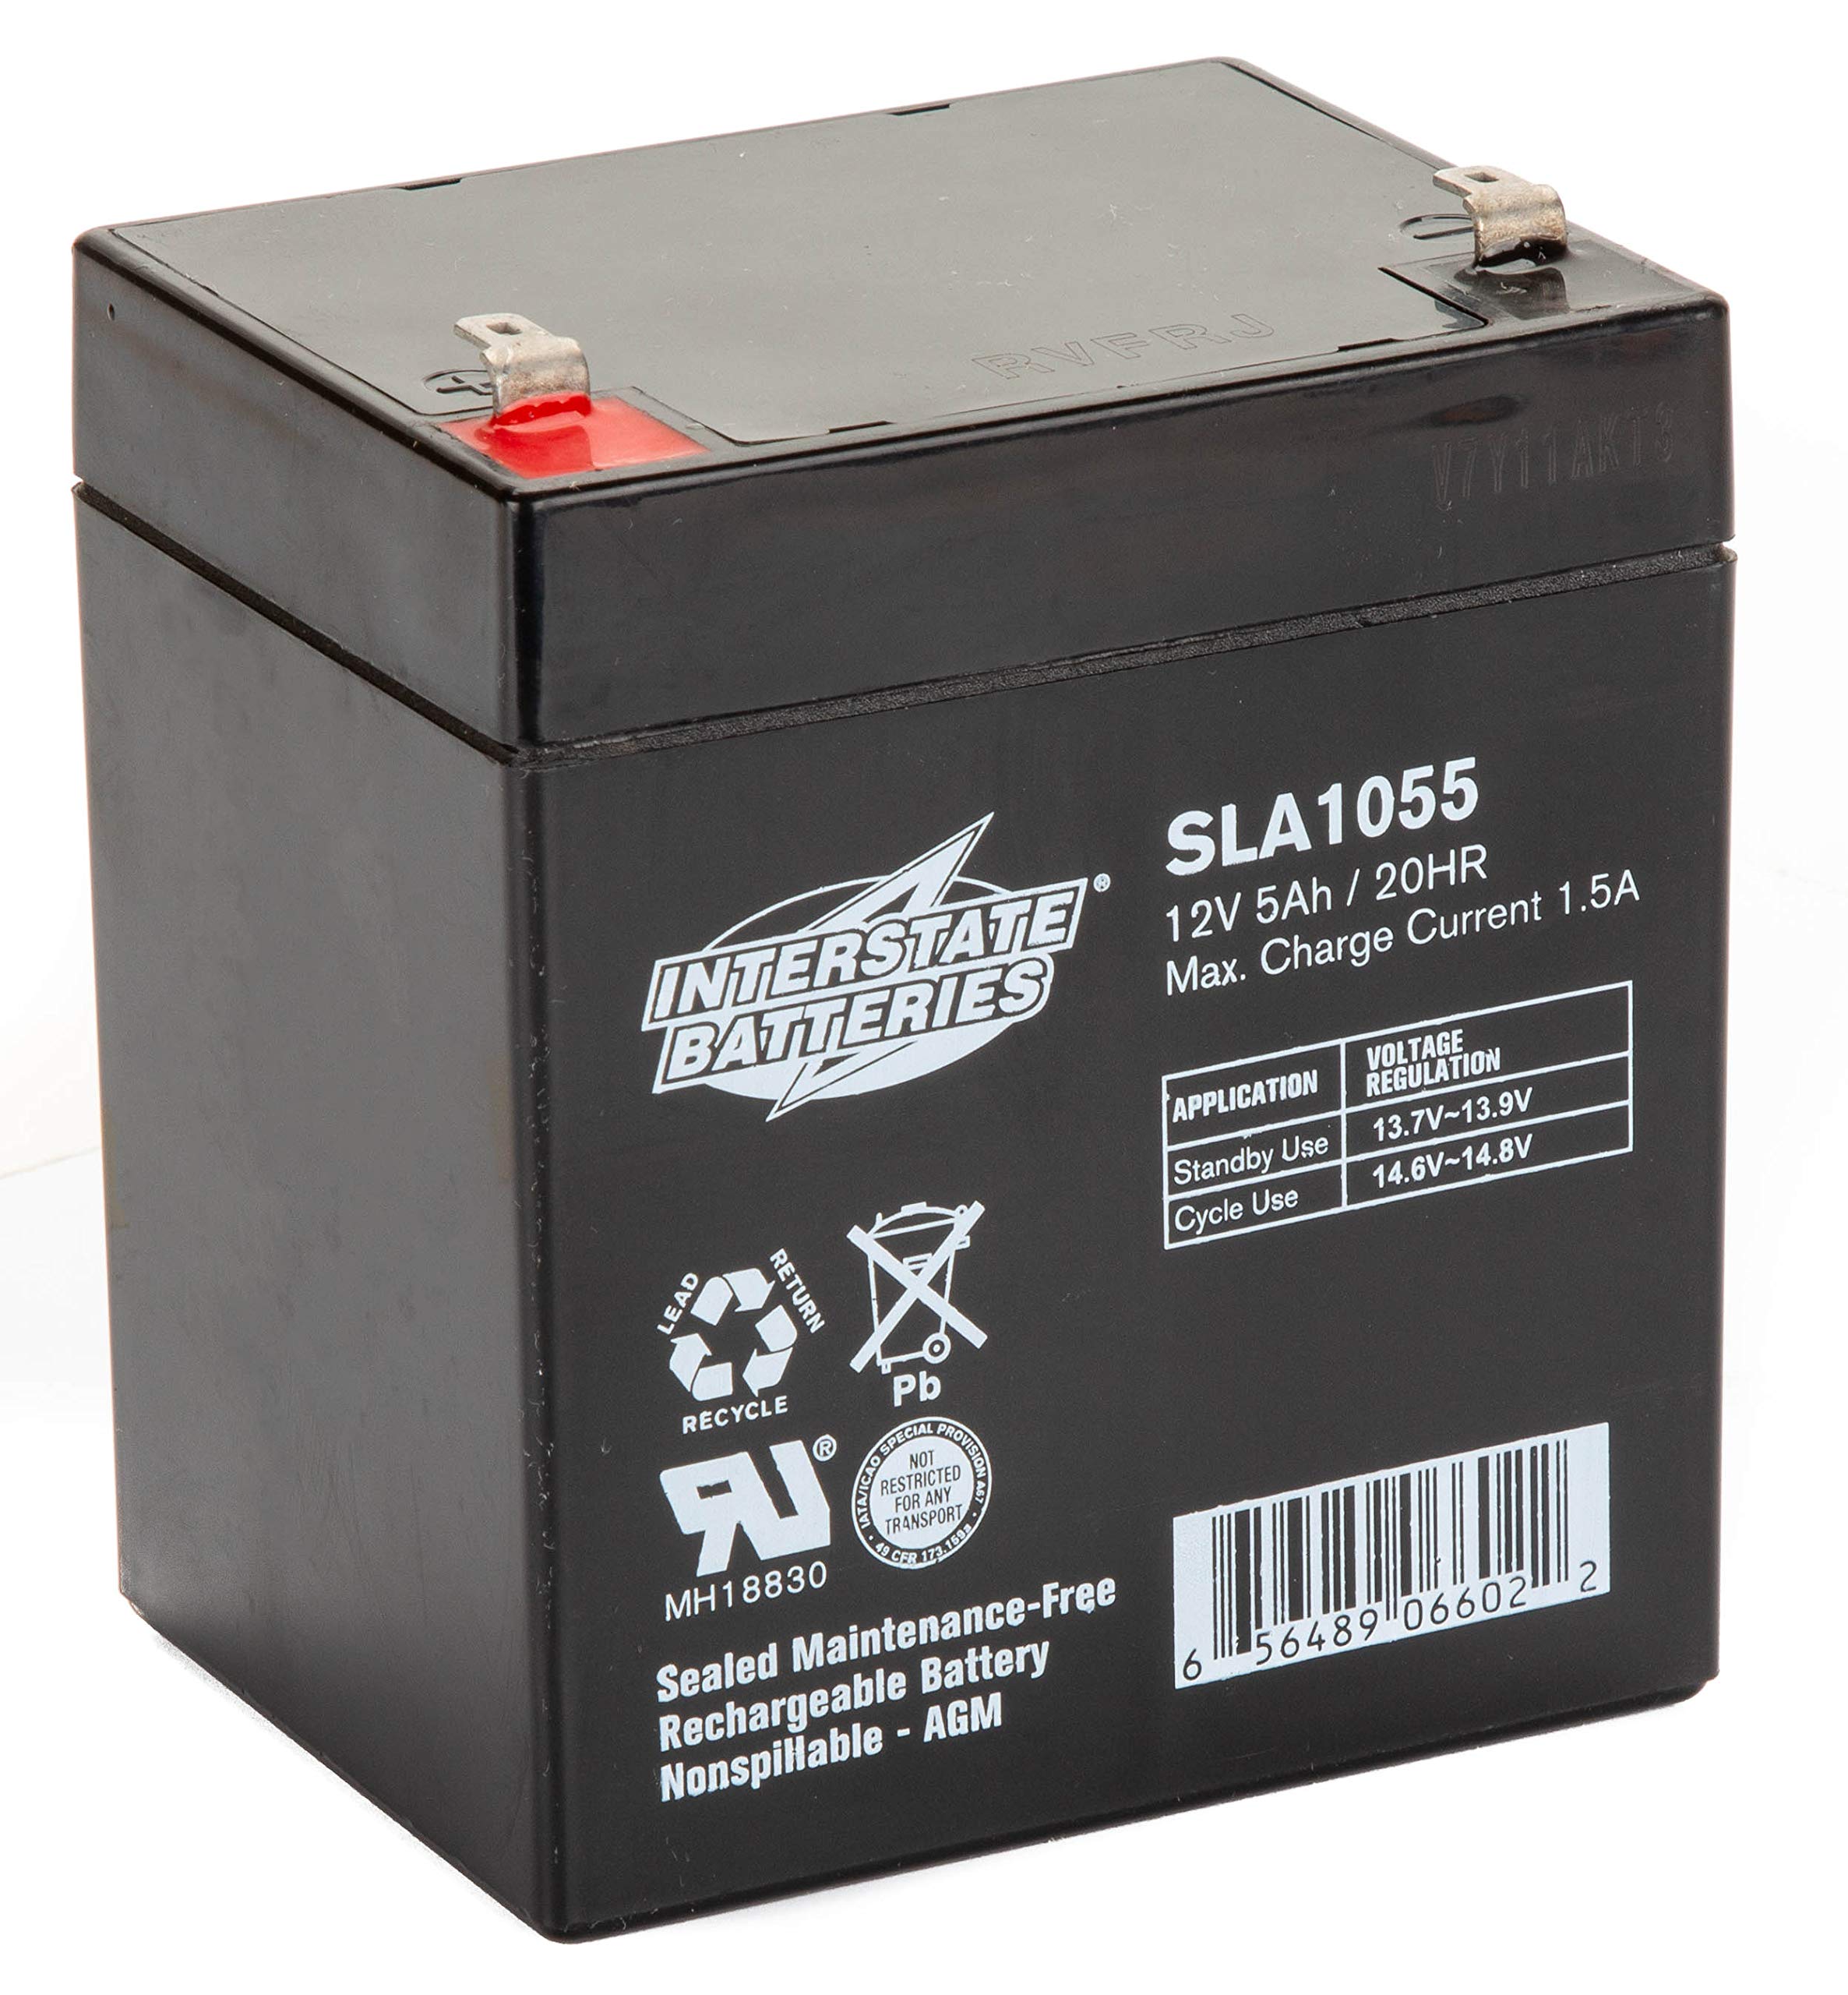 Interstate Batteries 12V 5Ah Battery (SLA1055) & 12V 8Ah Battery (SLA1075) Rechargeable Sealed Lead Acid SLA AGM (F1 Terminal) Wireless Internet UPS Systems, 5.94